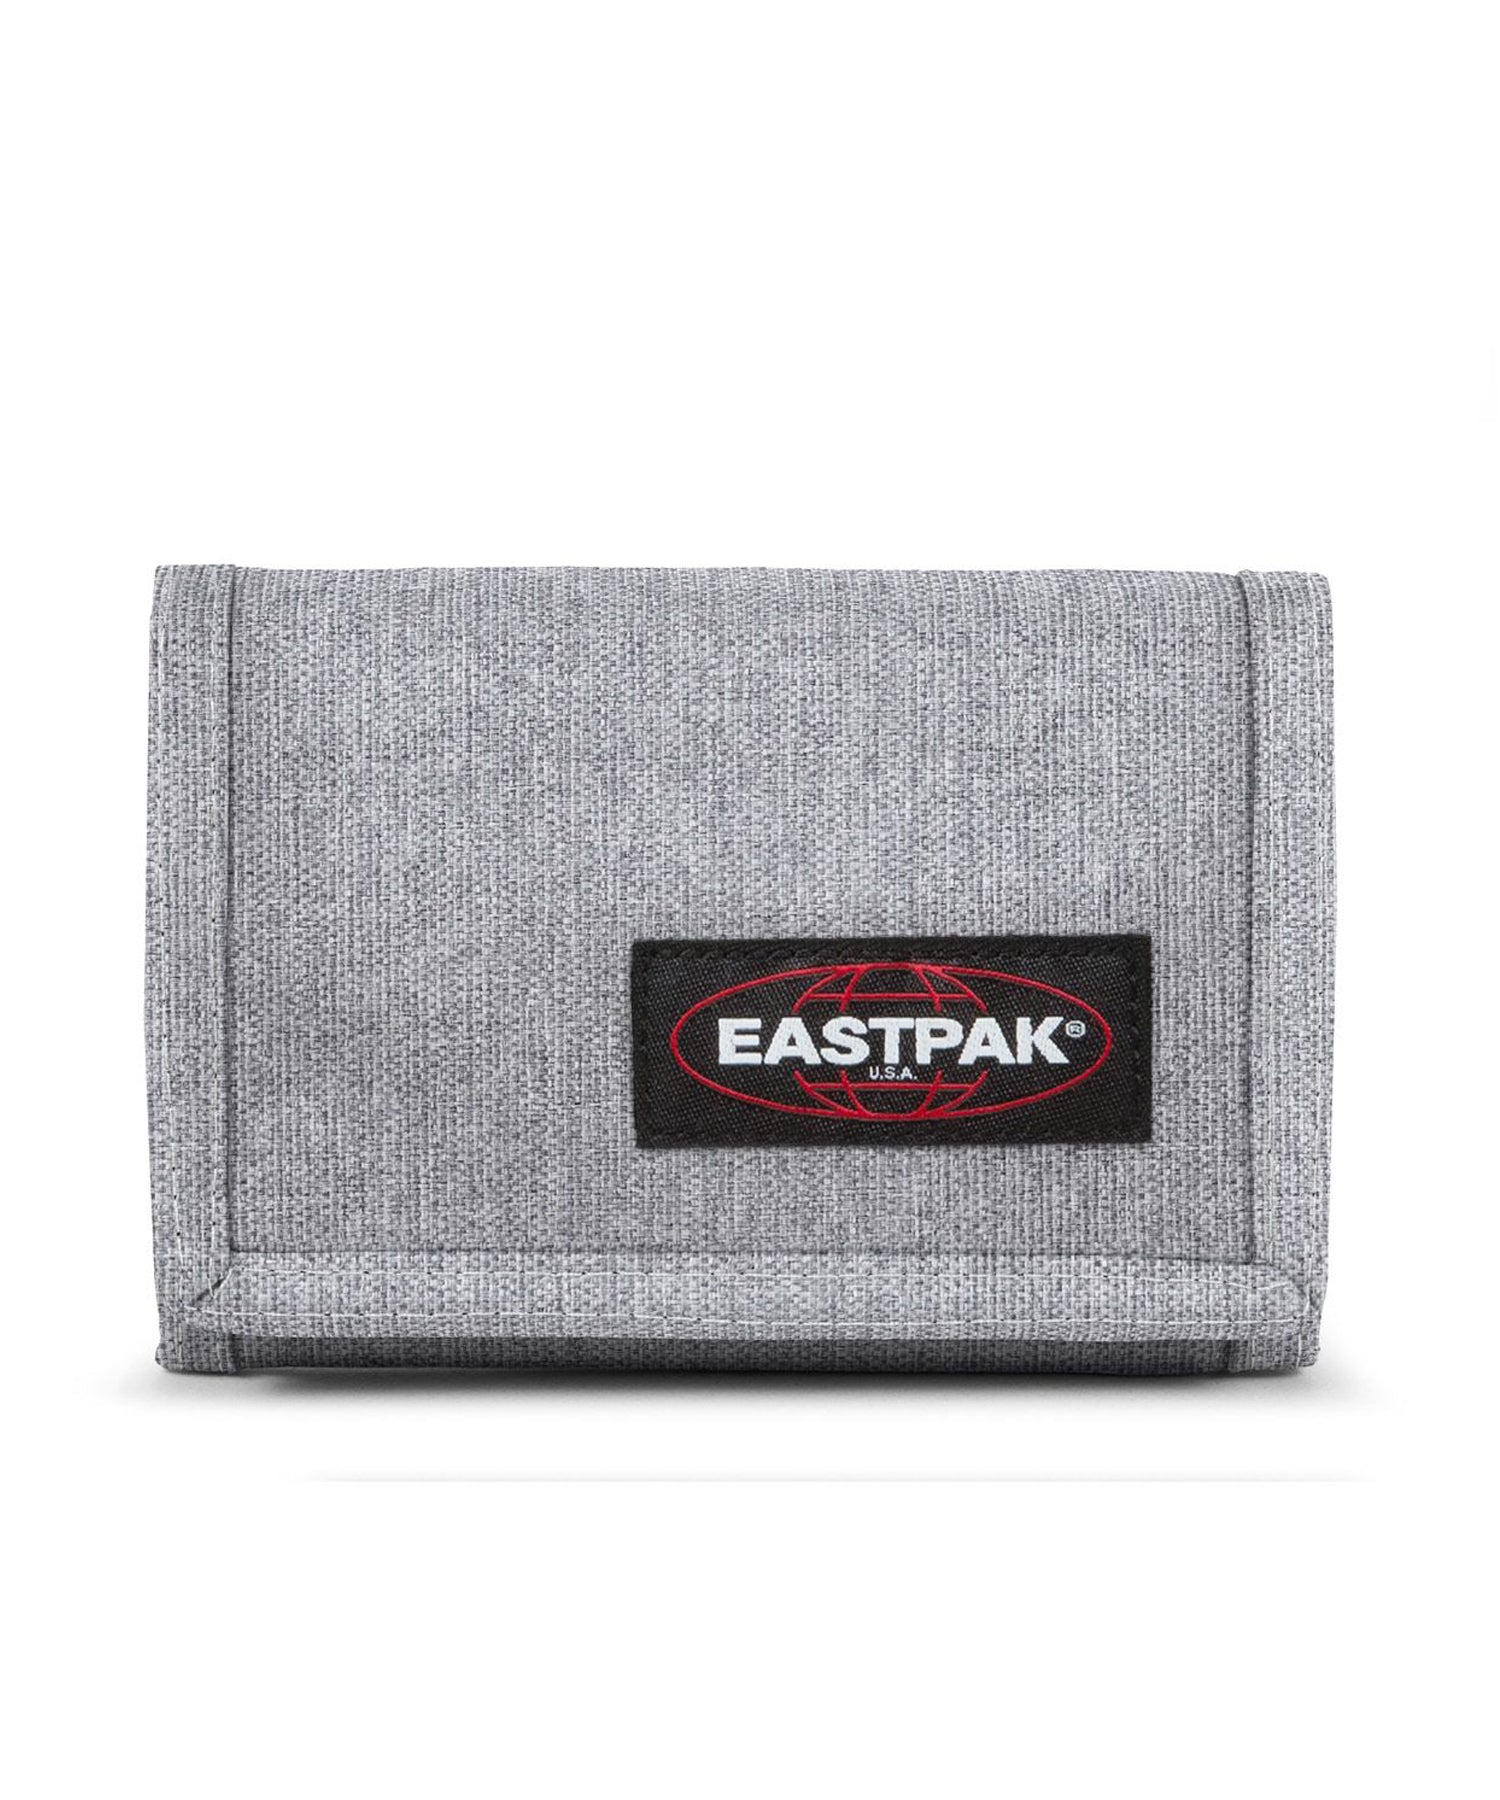 eastpak cartera de loneta color gris con logo eastpak en la parte frontal.